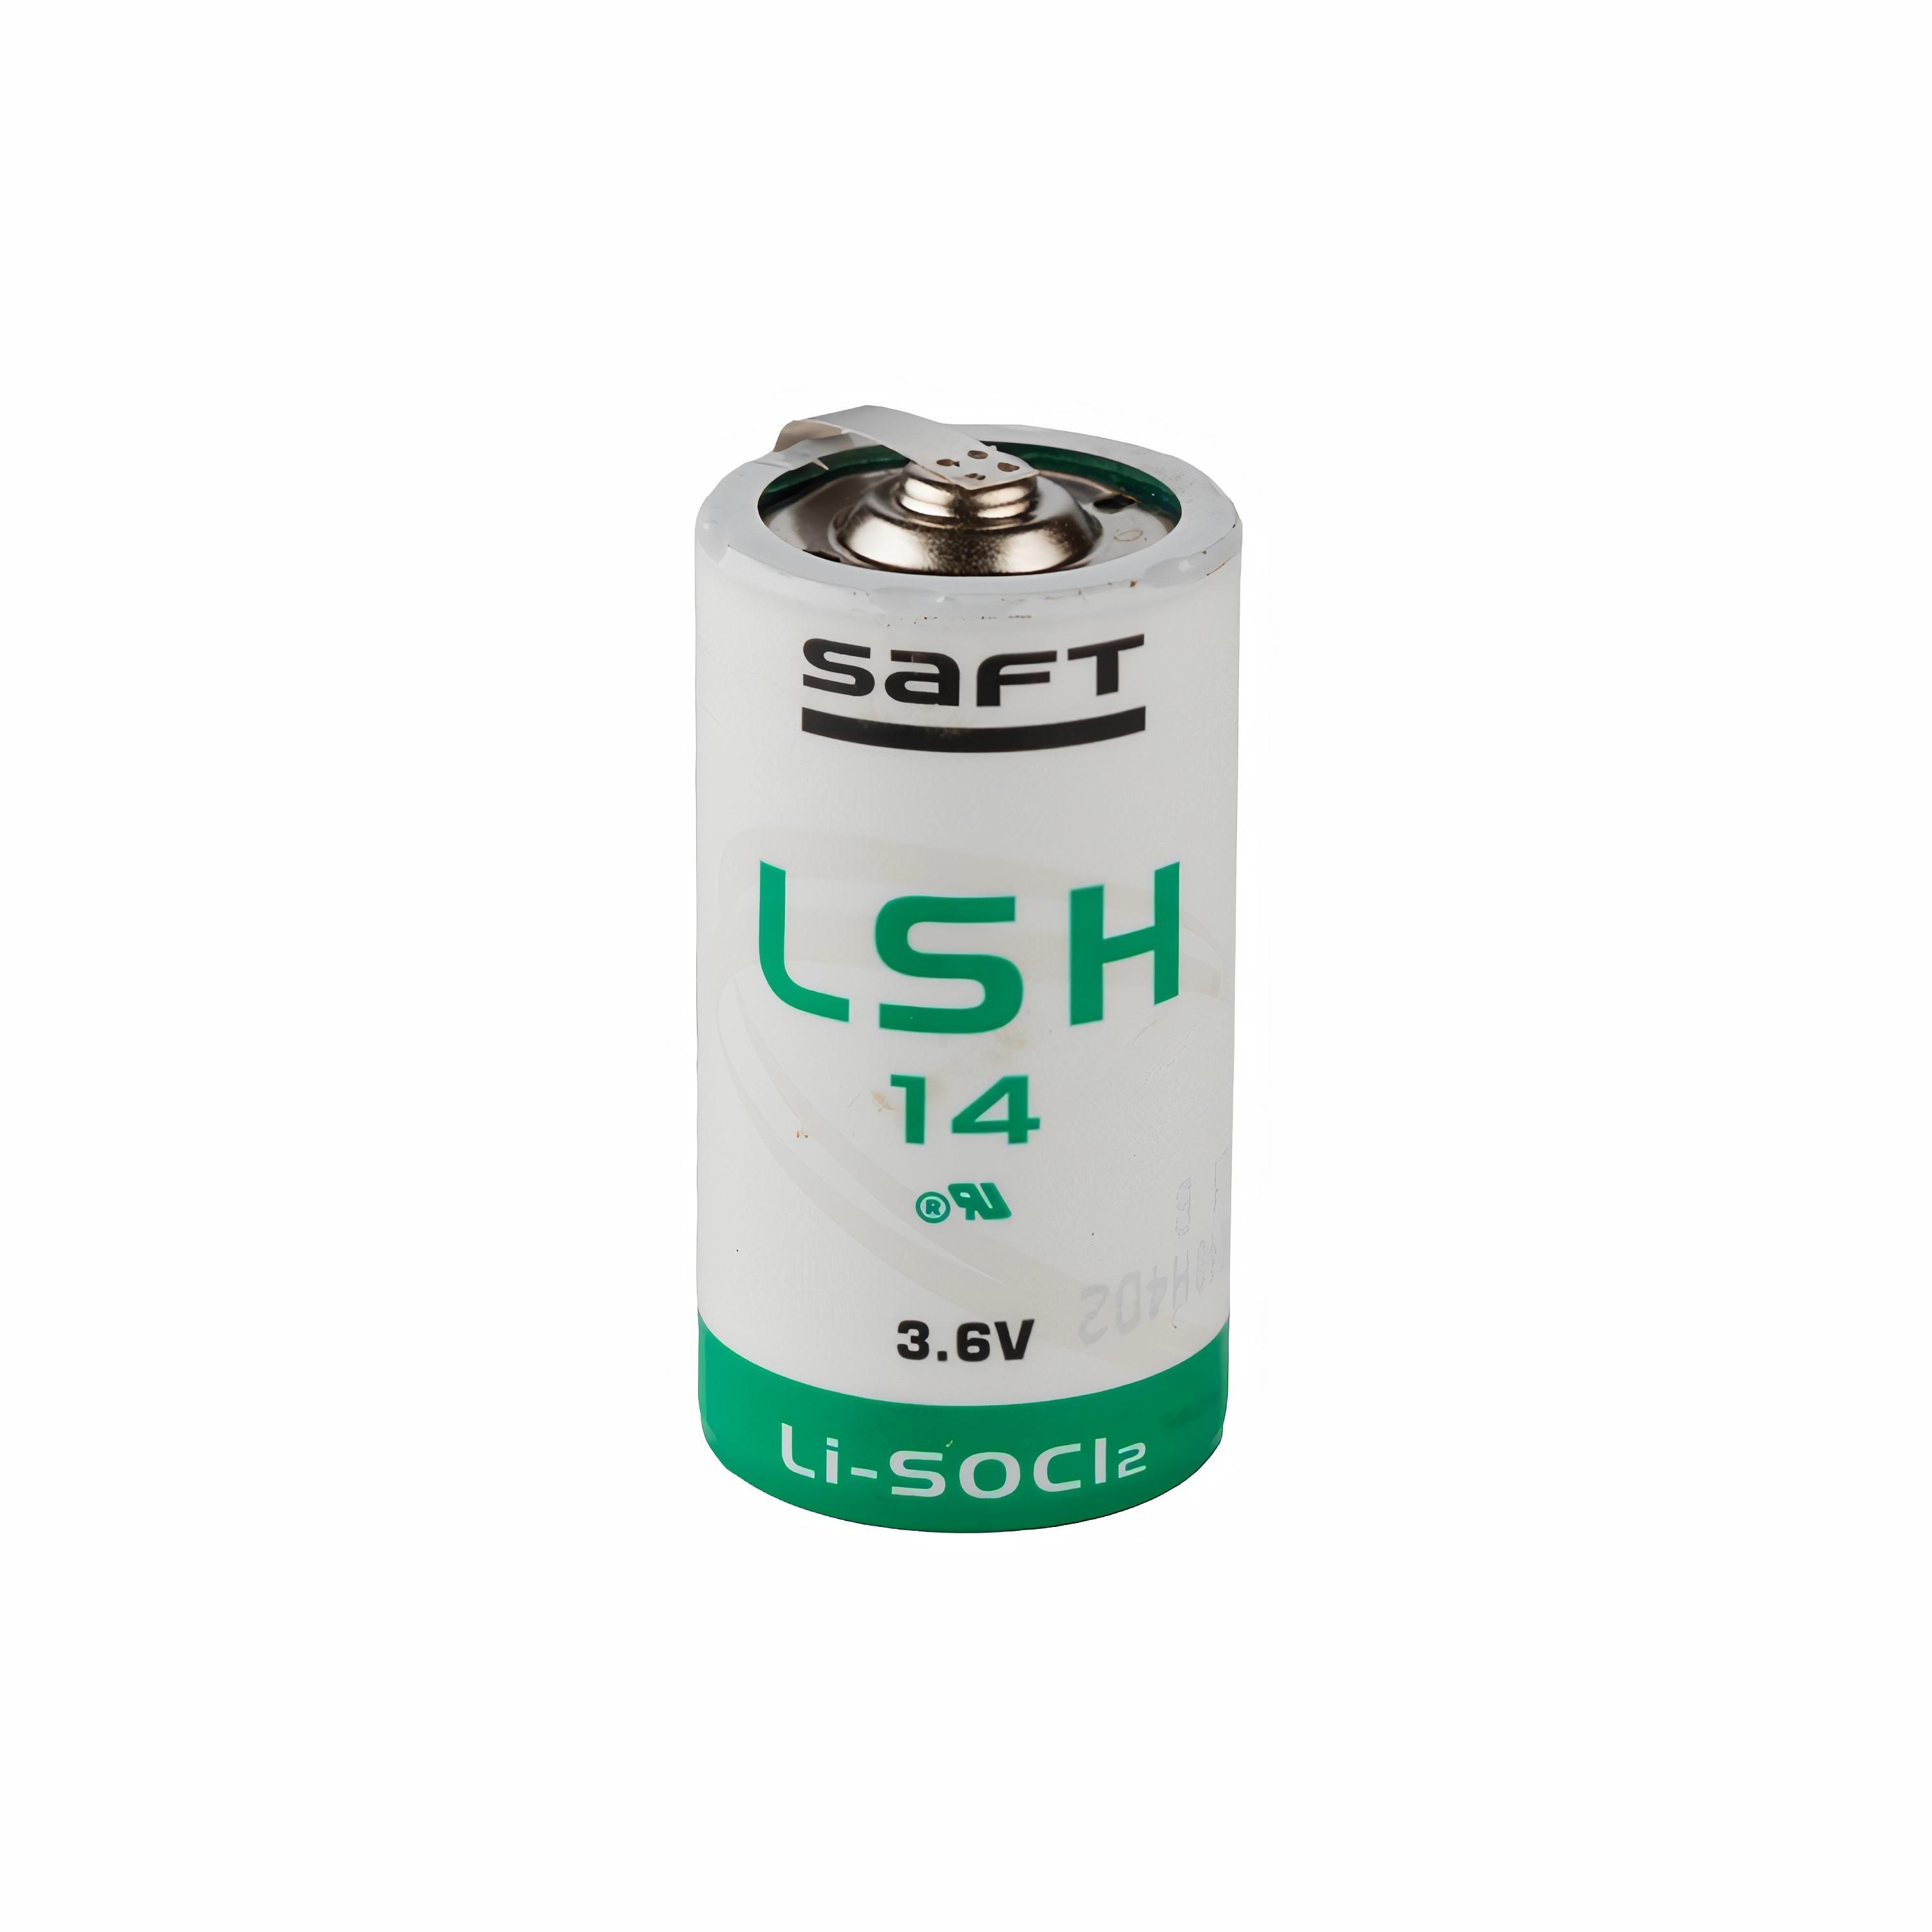 Батарейка SAFT LSH14 (C/R14) CNR Lithium/3.6 В 5800 мАч с лепестковыми выводами